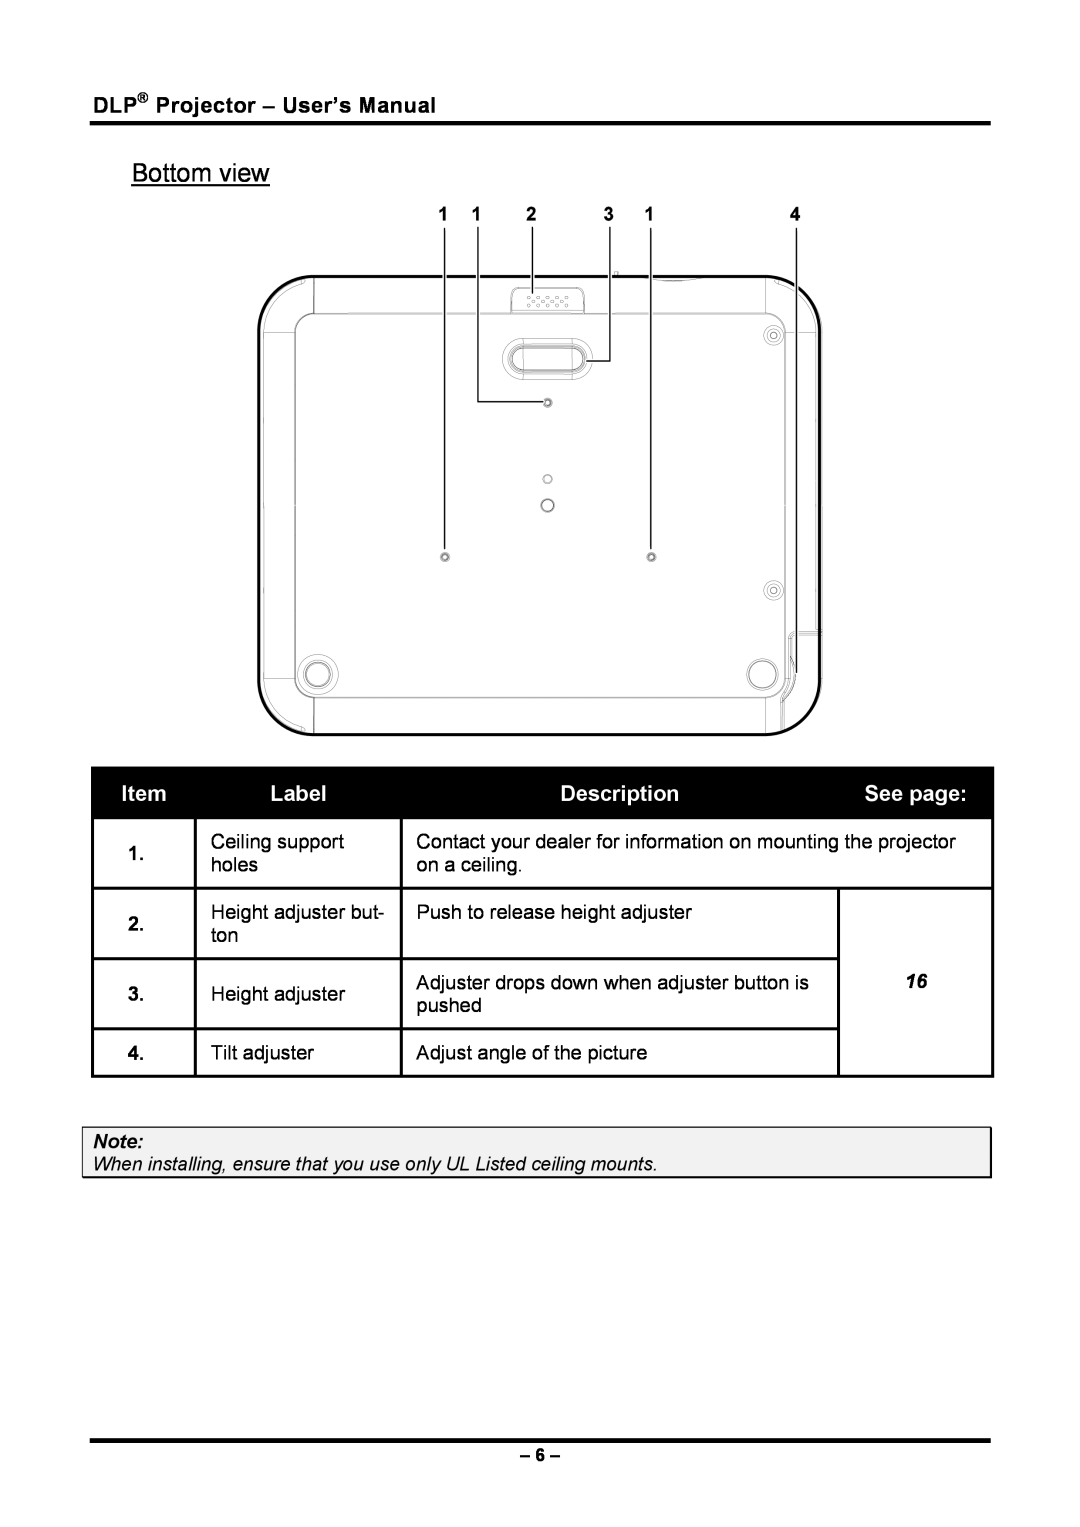 Planar PR5030 manual Bottom view, DLP Projector - User’s Manual, Label, Description, See page 